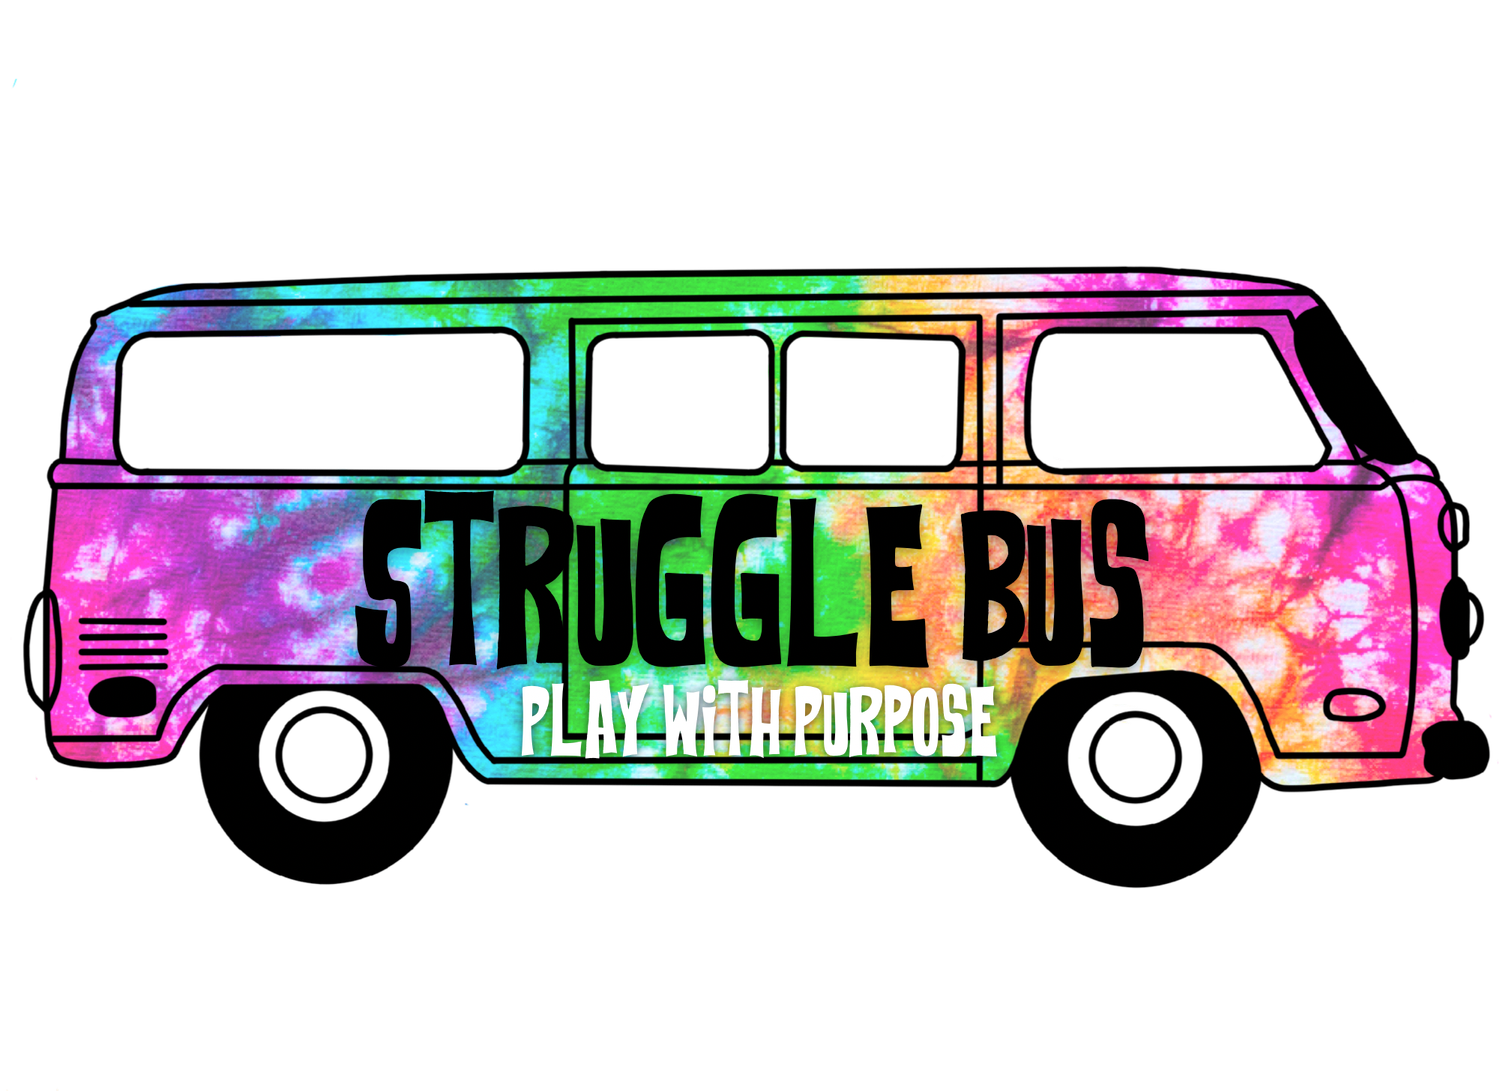 Struggle Bus